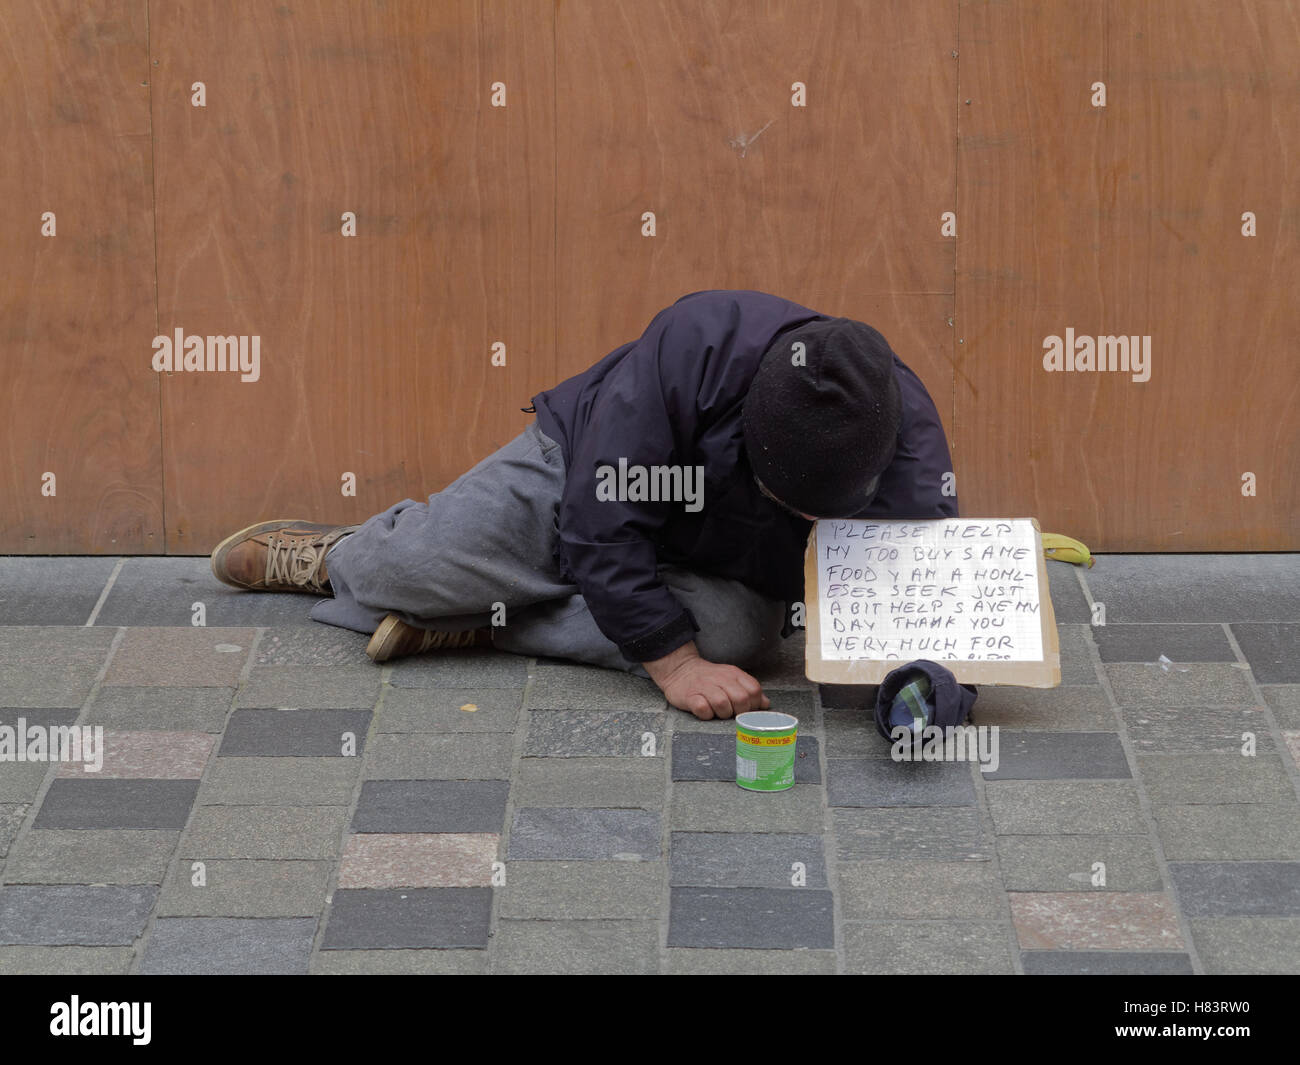 Homeless man begging on the street, Glasgow, Scotland, UK. Stock Photo